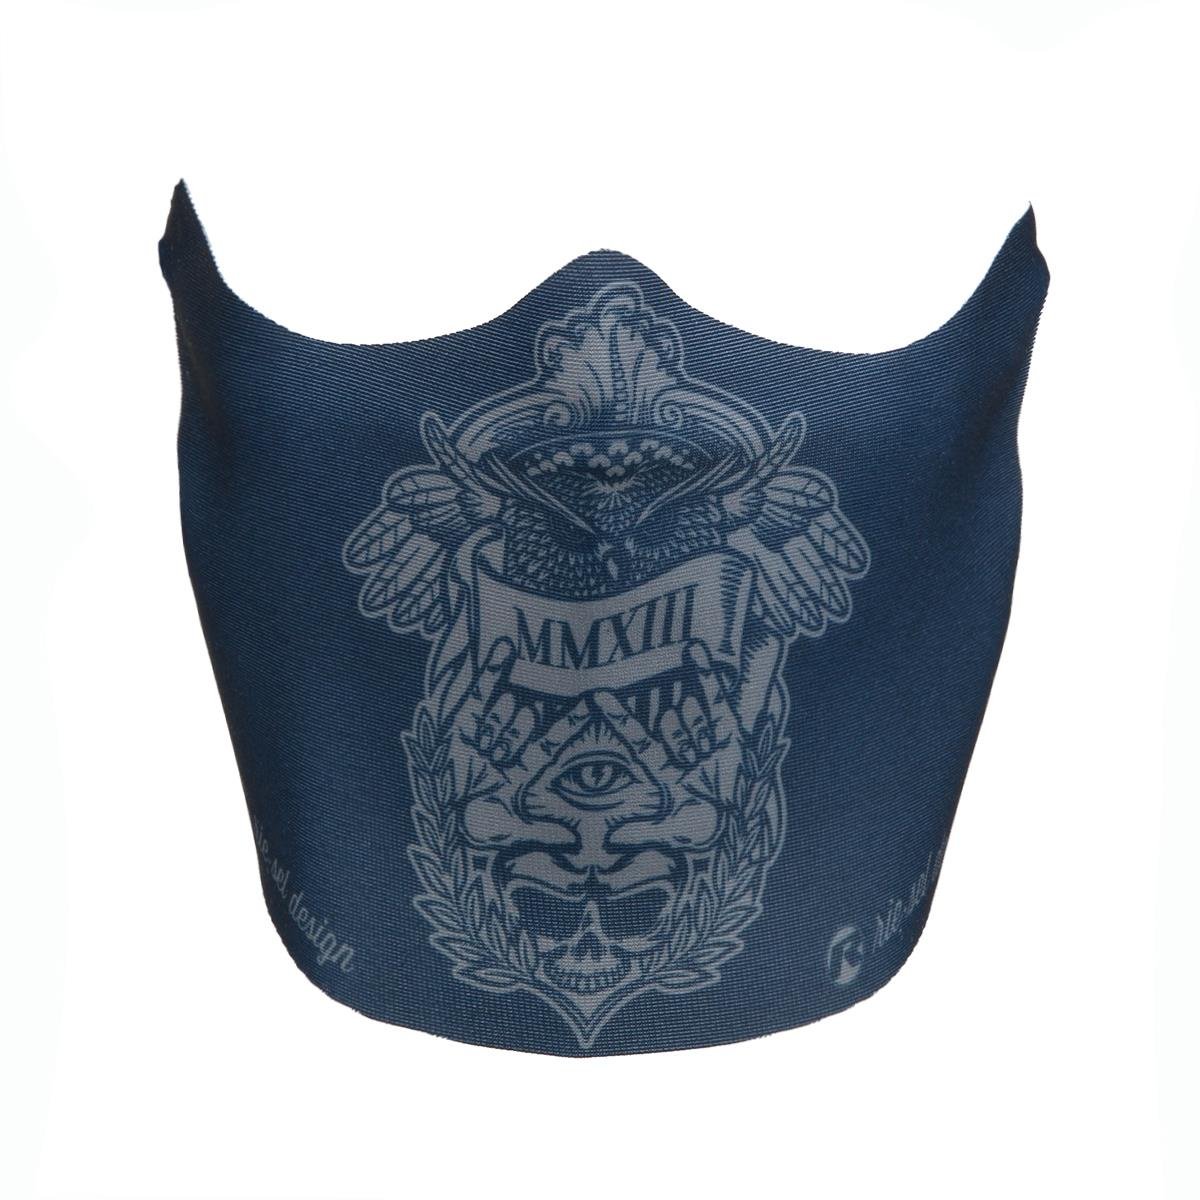 Riesel Design Masque  Illuminati Navy Blue